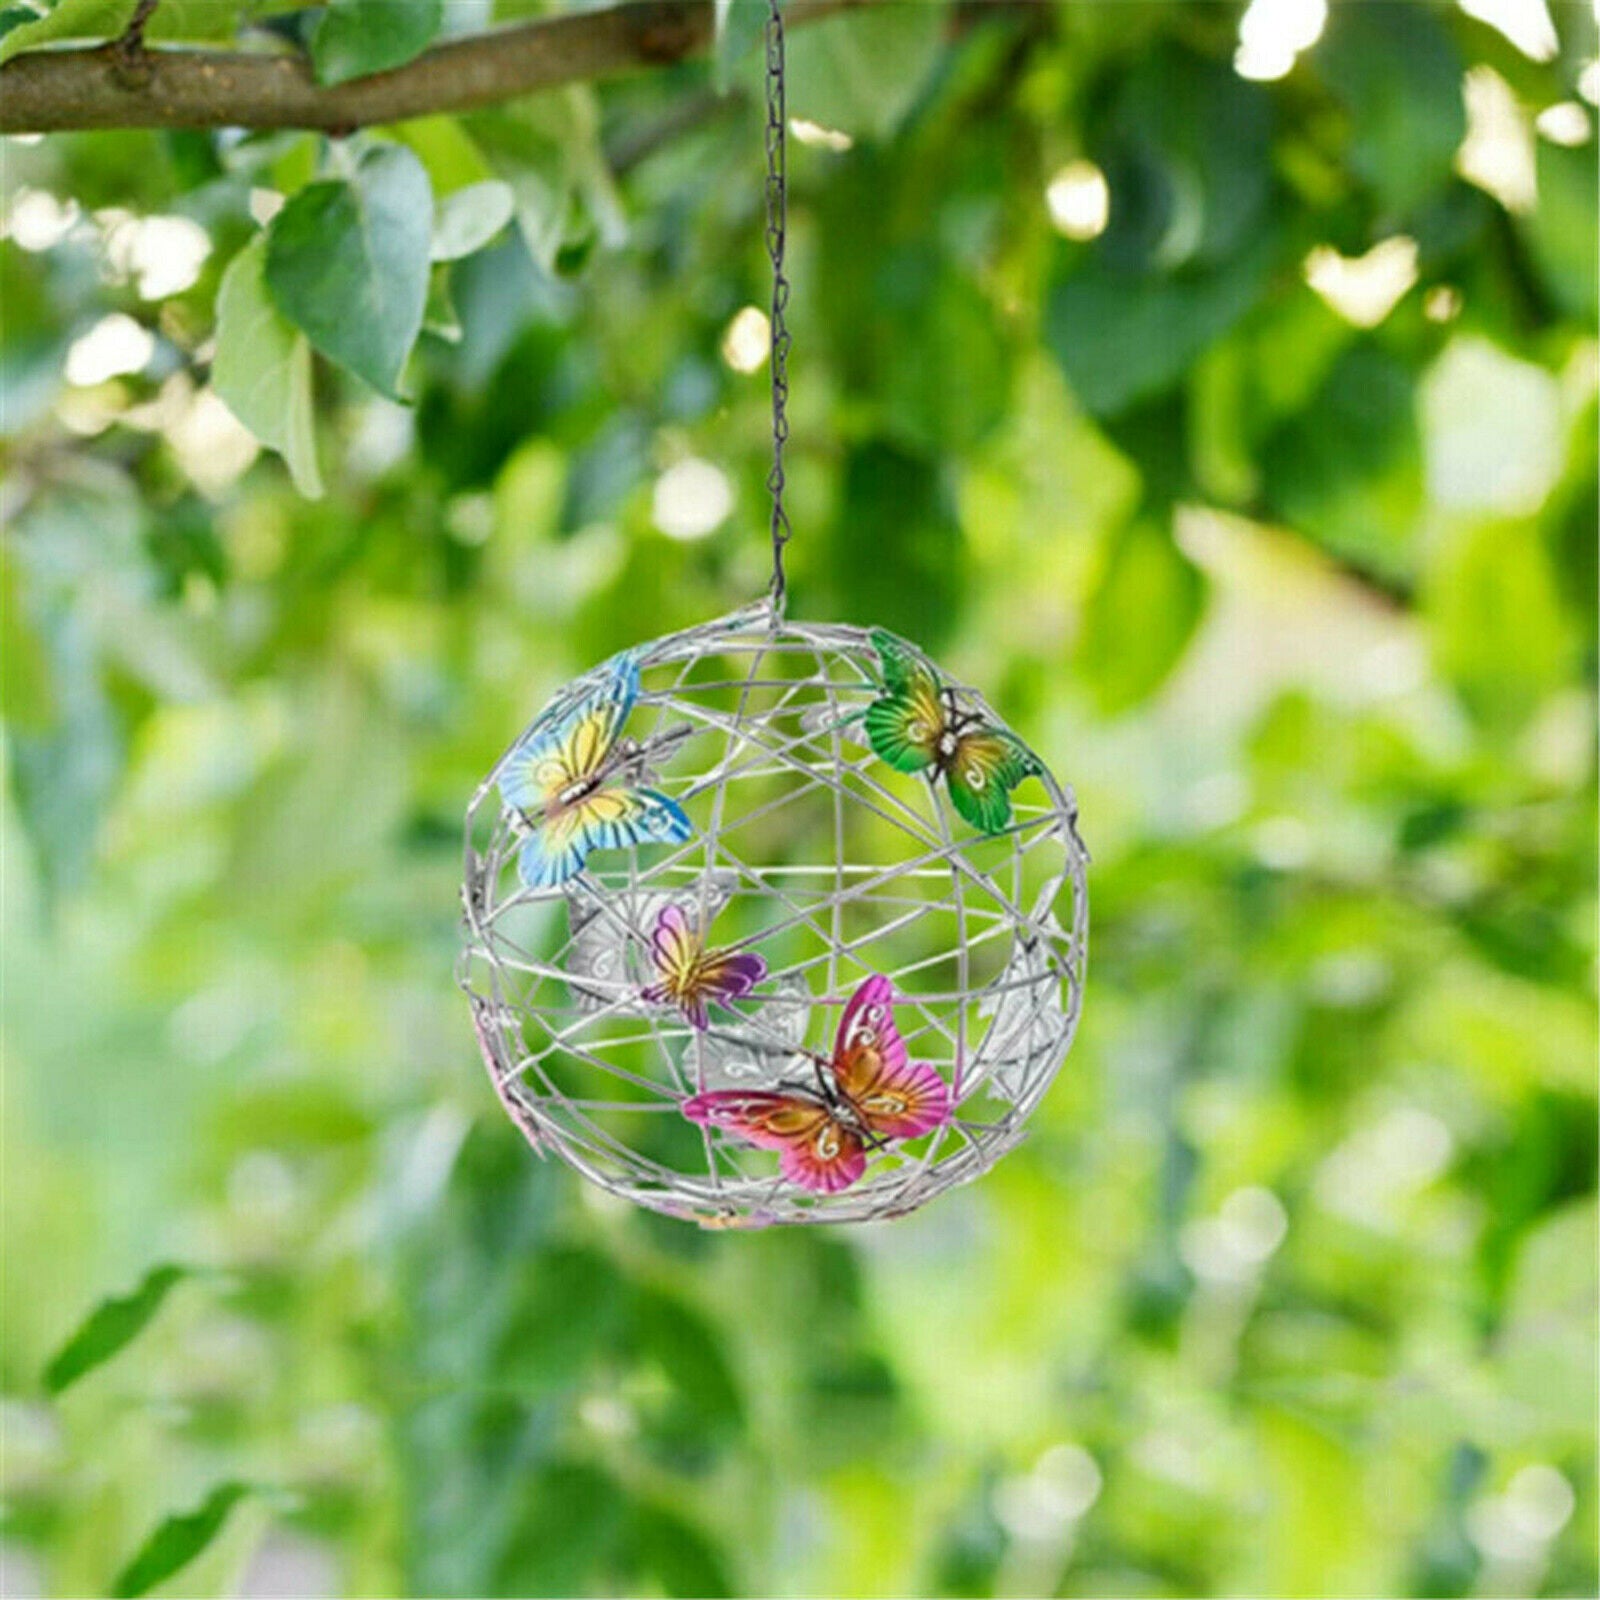 Butterfly Light Ball Lamp Solar Garden Decoration Lover Gifts for Weddings